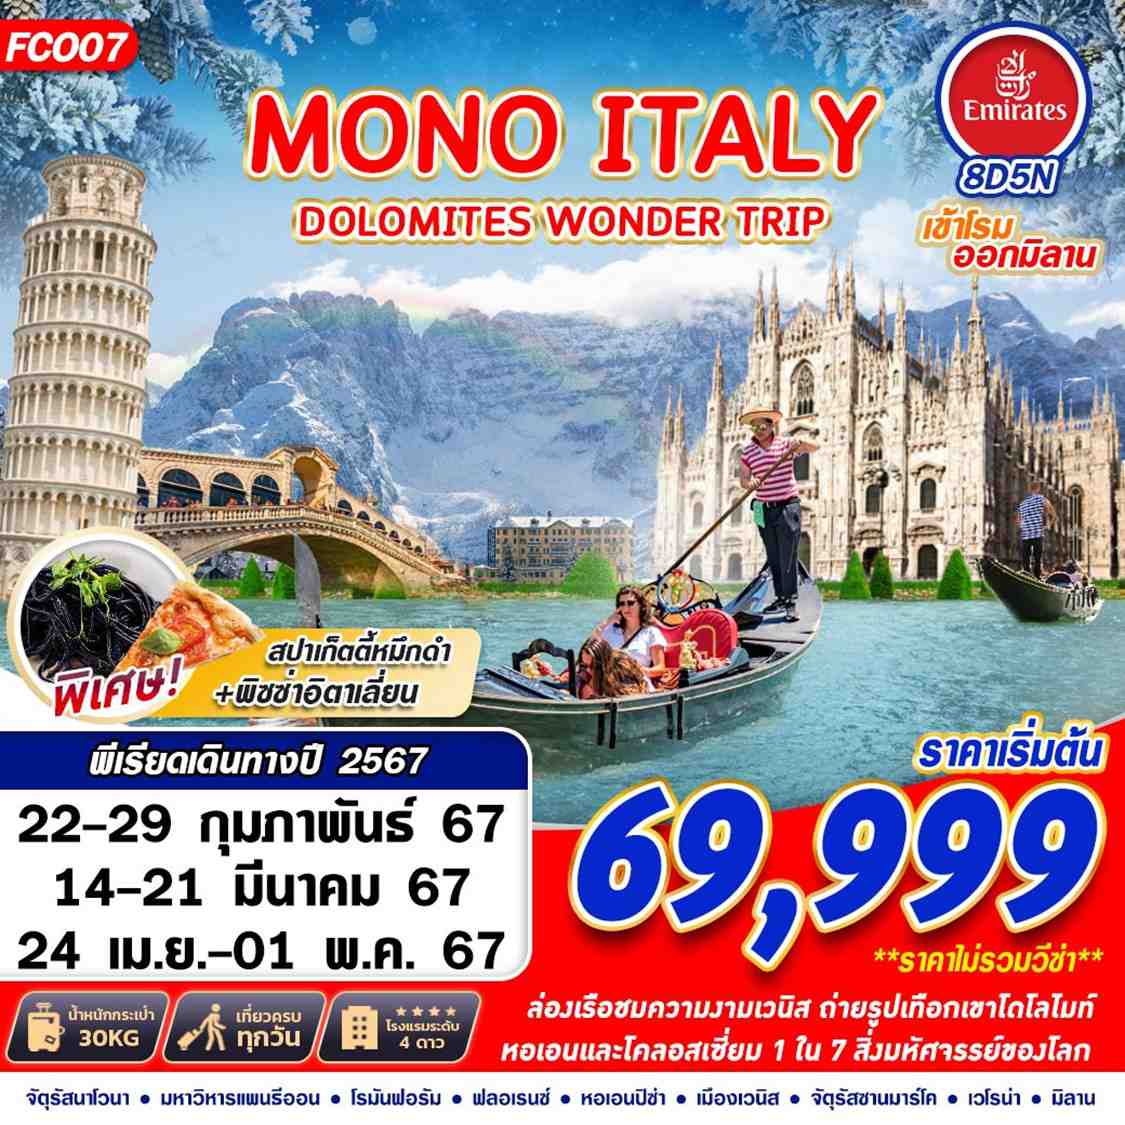 MONO ITALY DOLOMITES WONDER TRIP 8 วัน 5 คืน (EK)